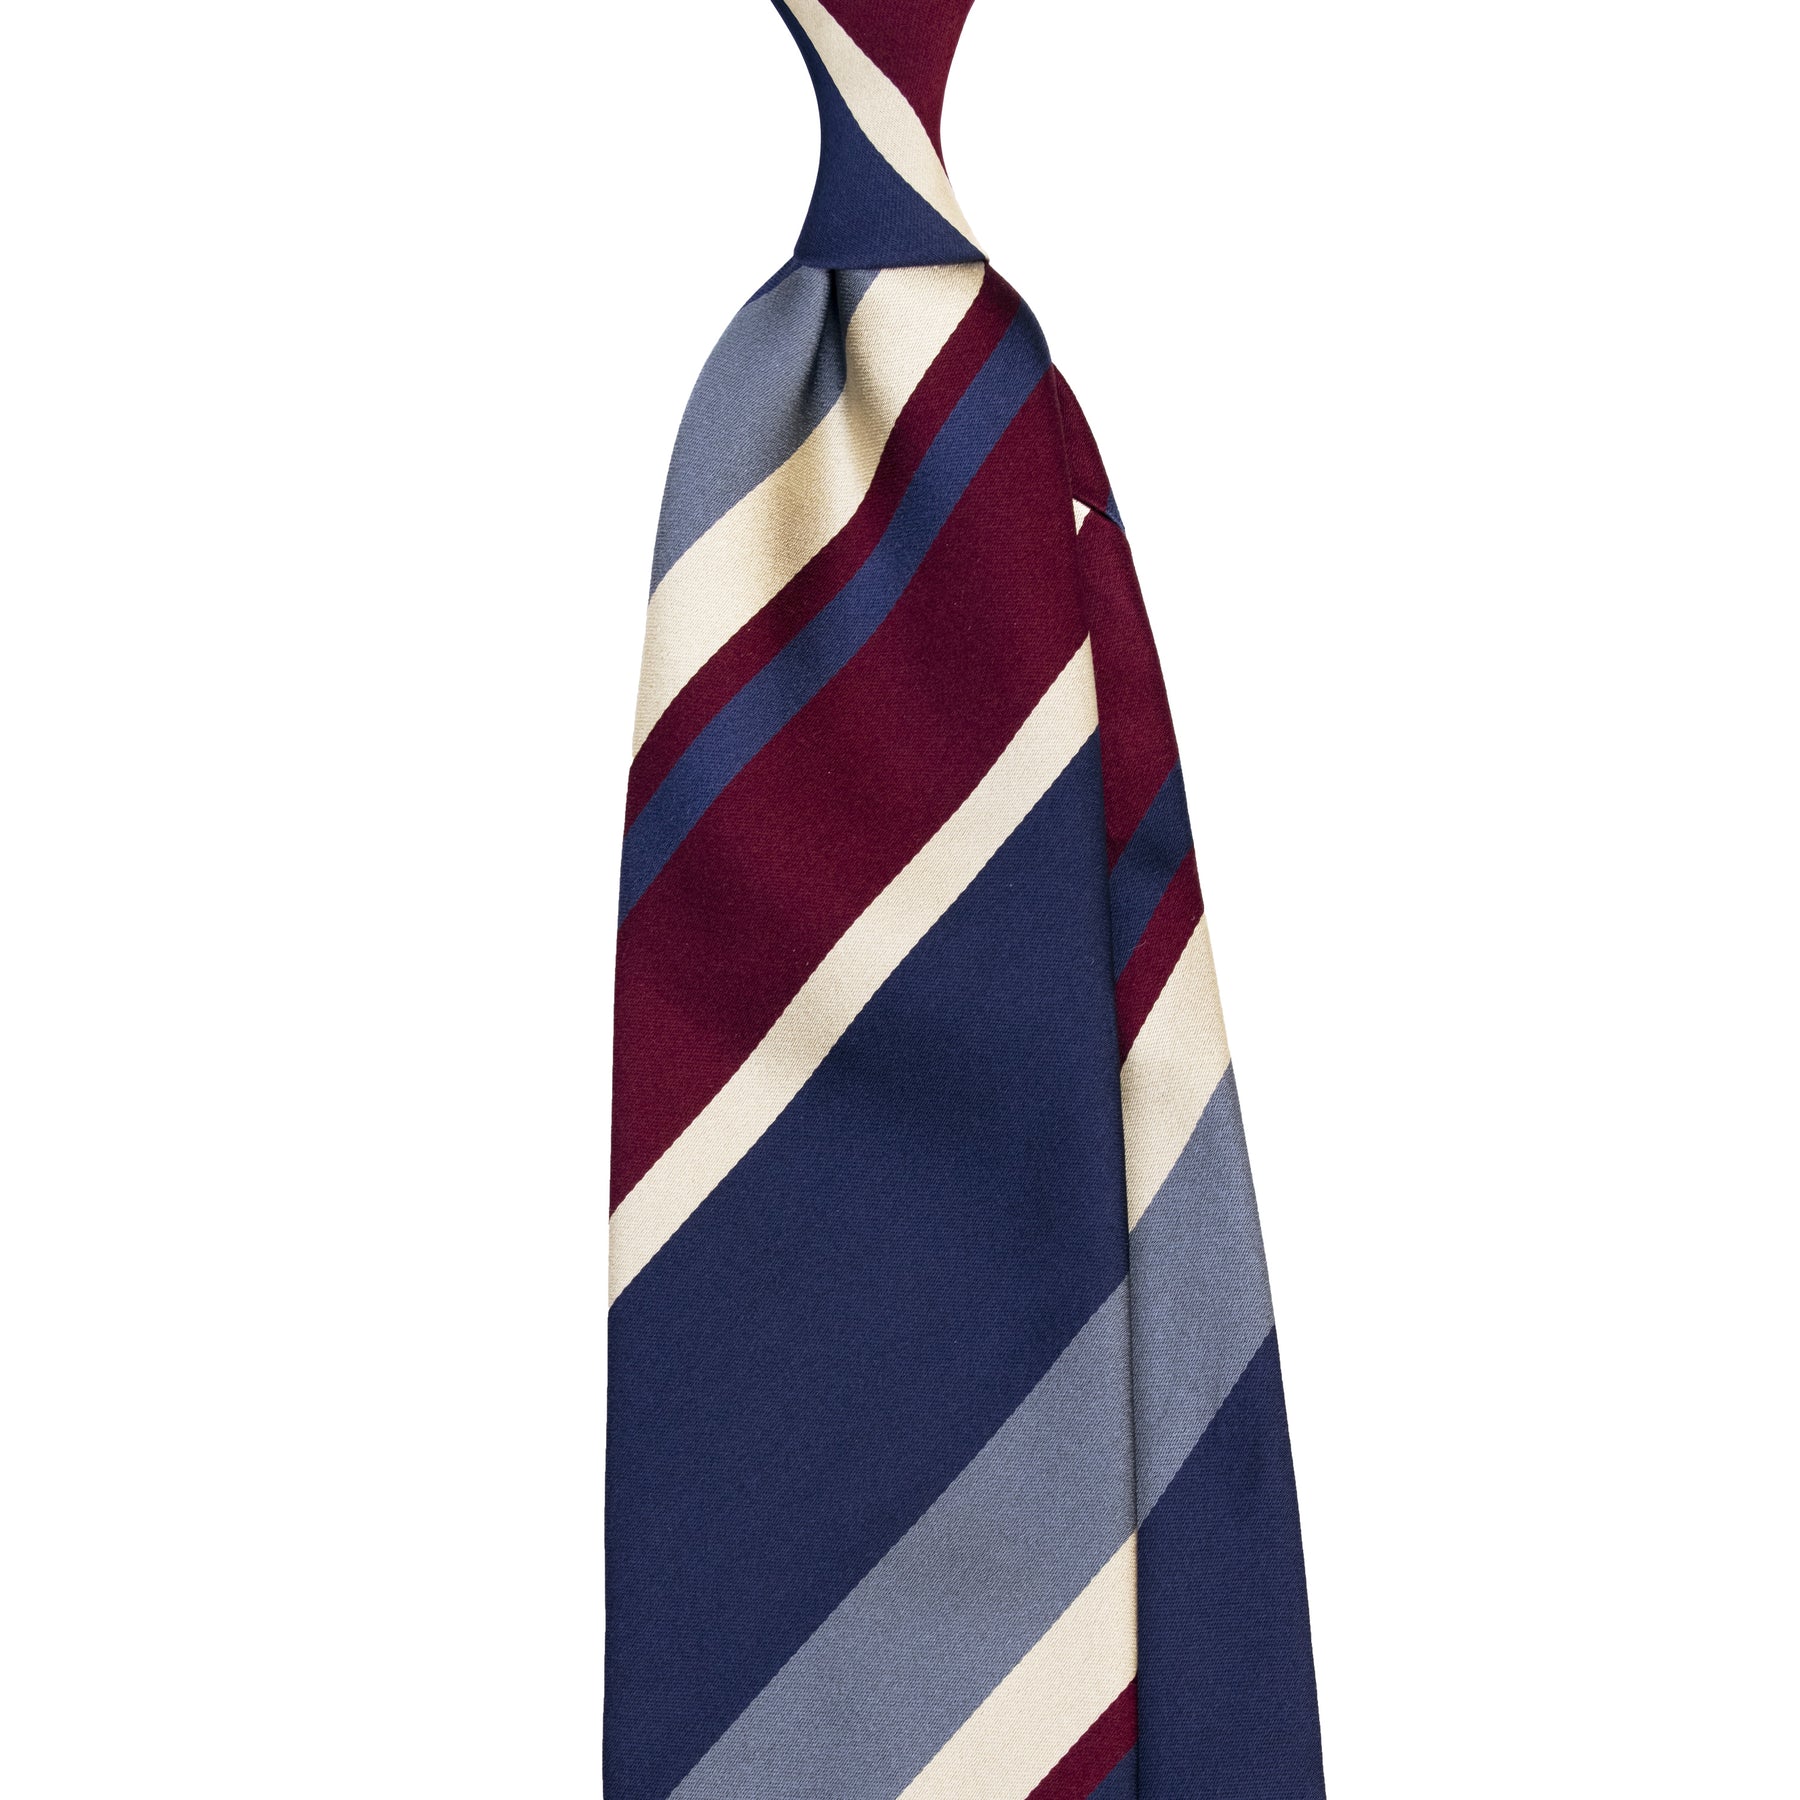 Panel Block Stripe Silk Satin Tie – Navy/Burgundy                                           SKU: SC.ST.005.N